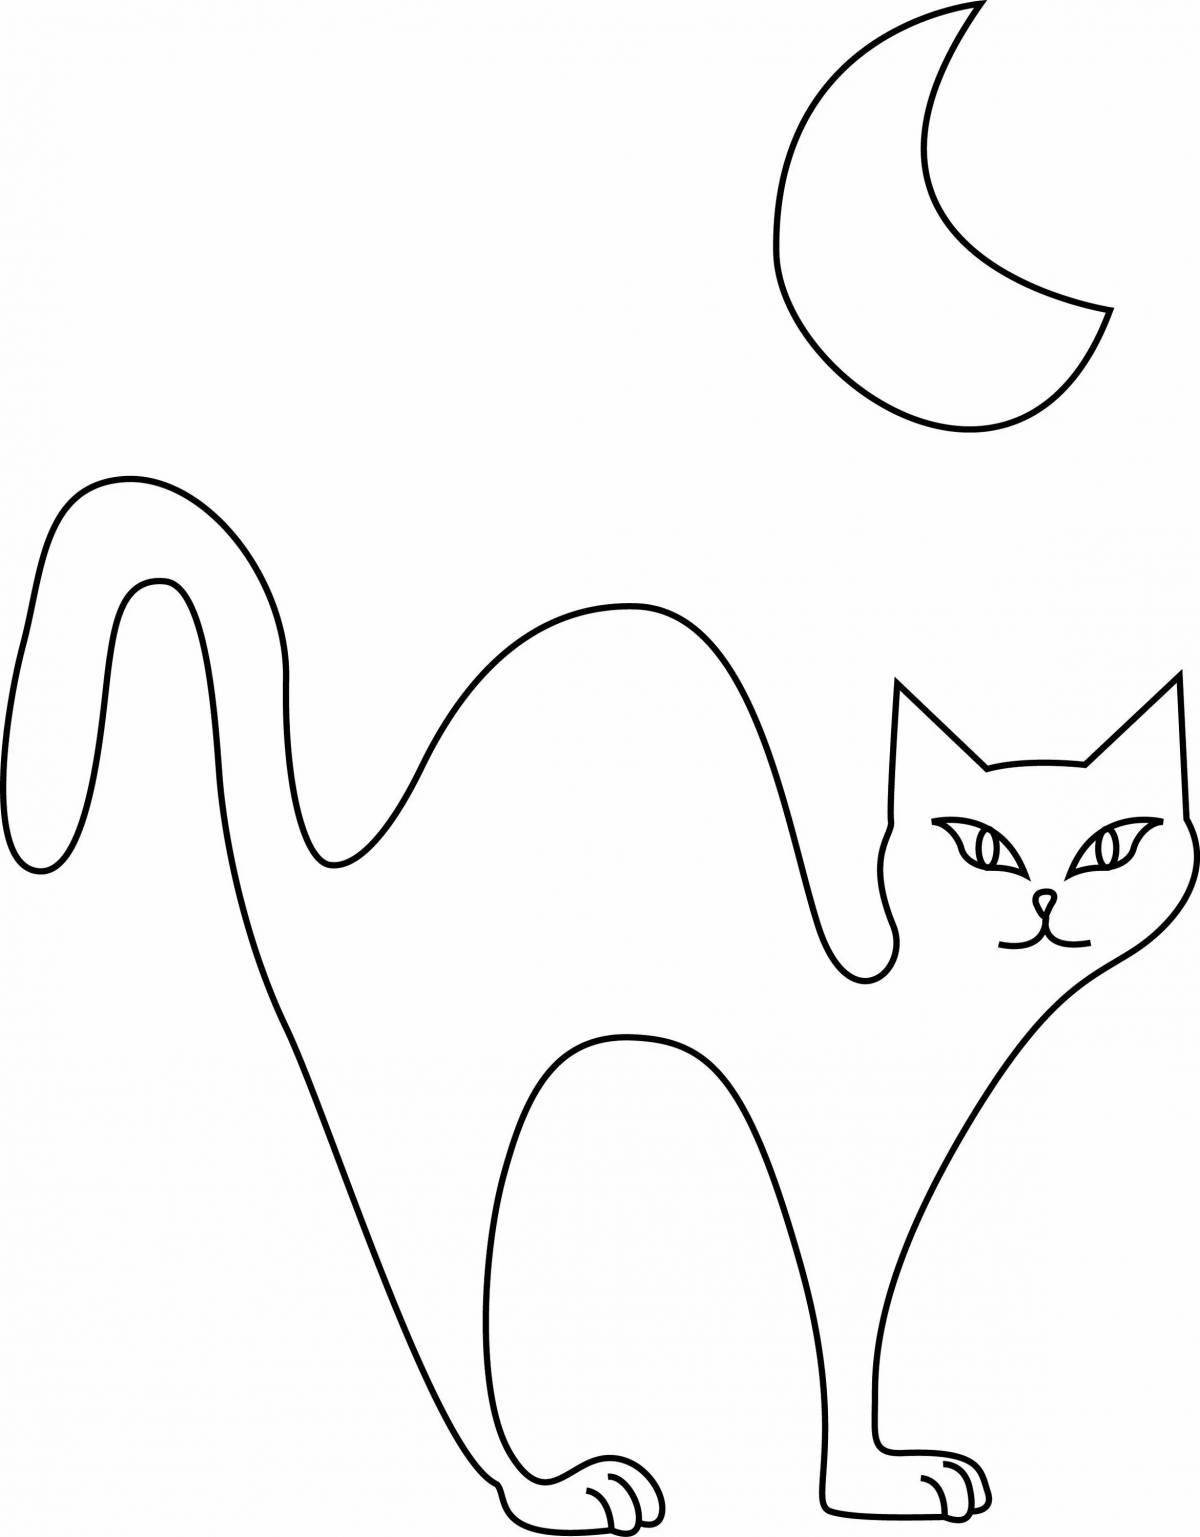 Раскраска яркий силуэт кошки